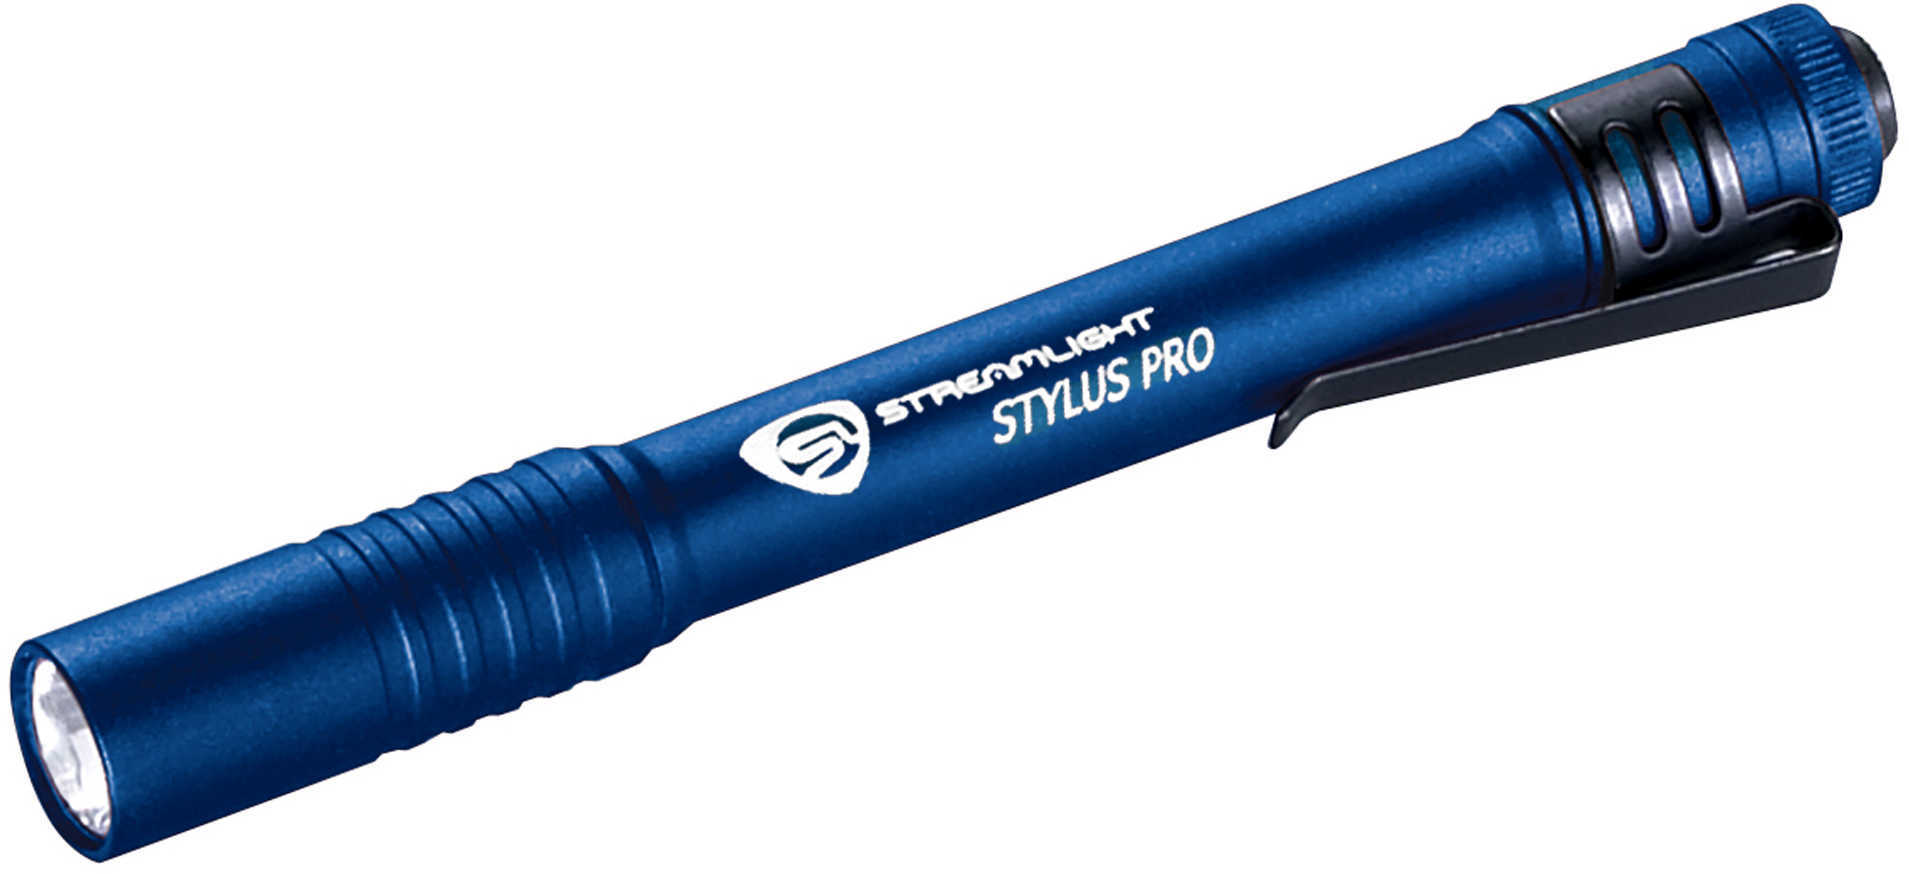 Streamlight Stylus Pro Super Bright LED Penlight